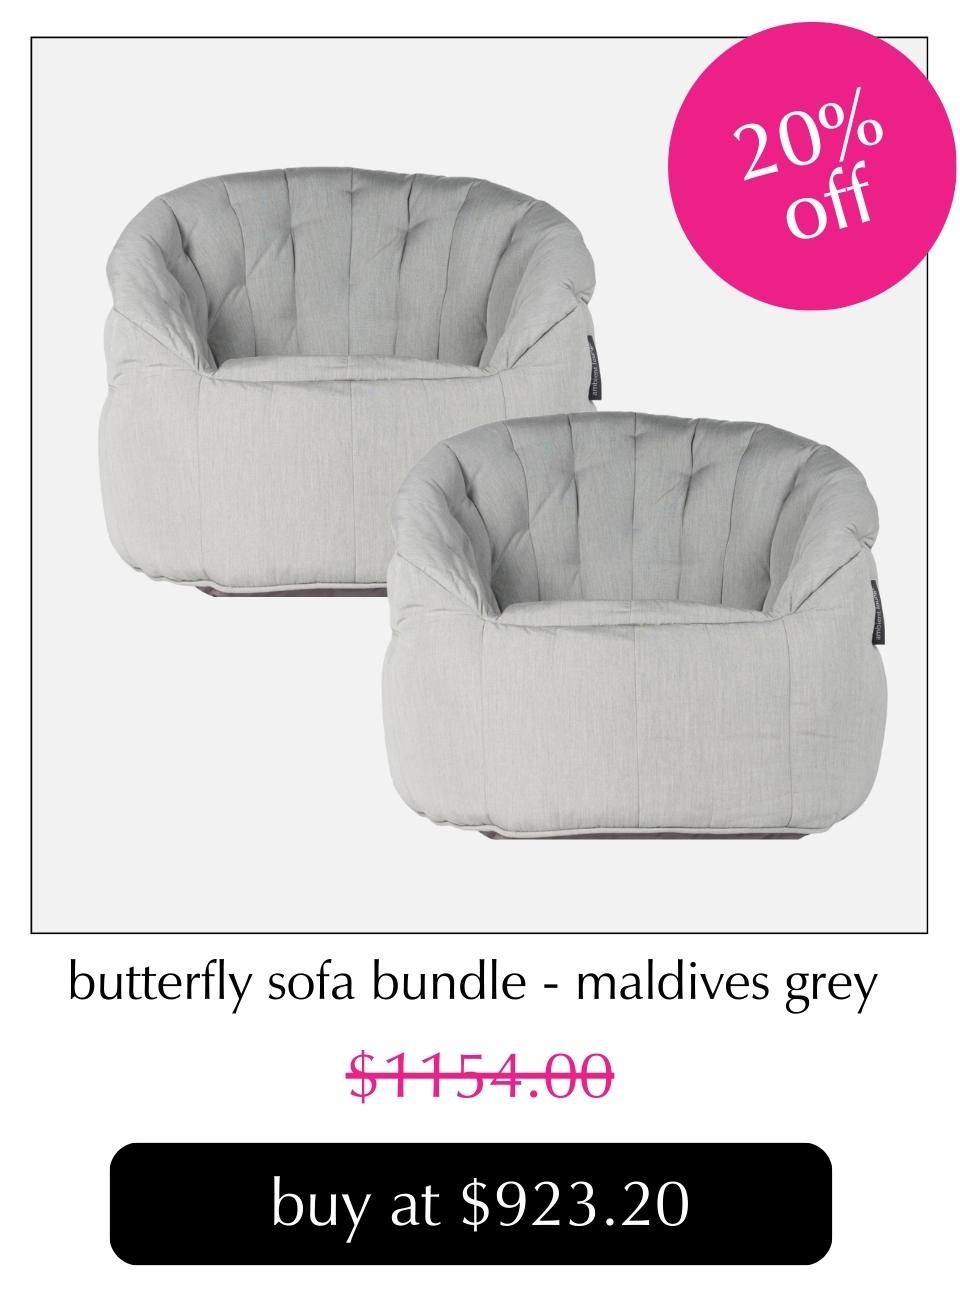 butterfly sofa bundle maldives grey 20% off